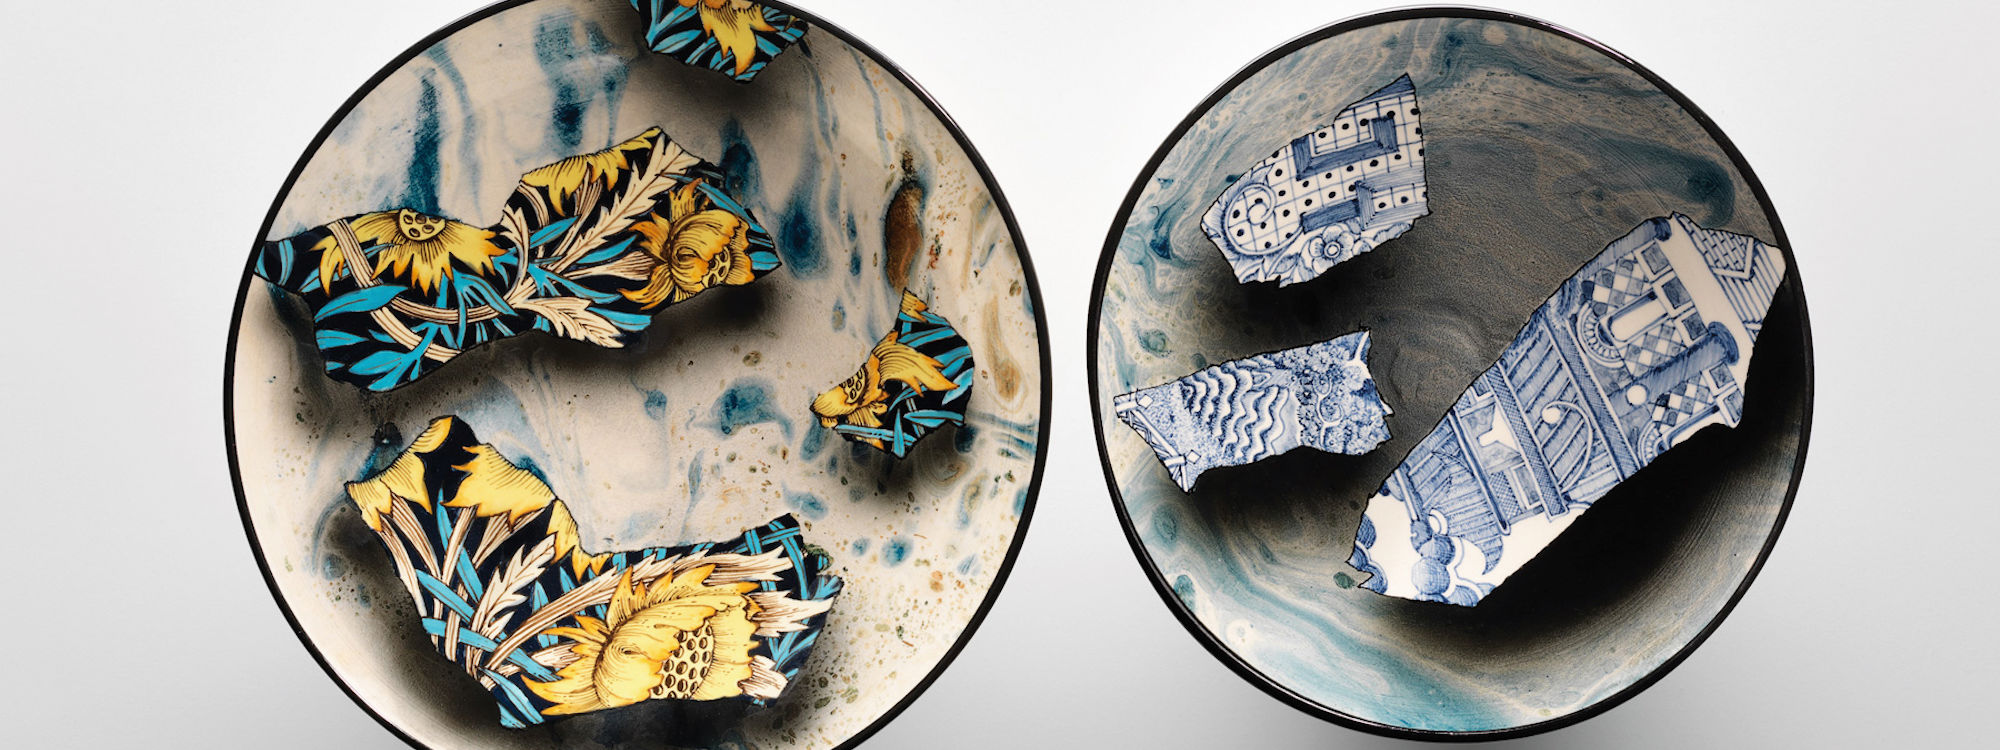 Stephen Bowers plates - Ceramic Review Magazine